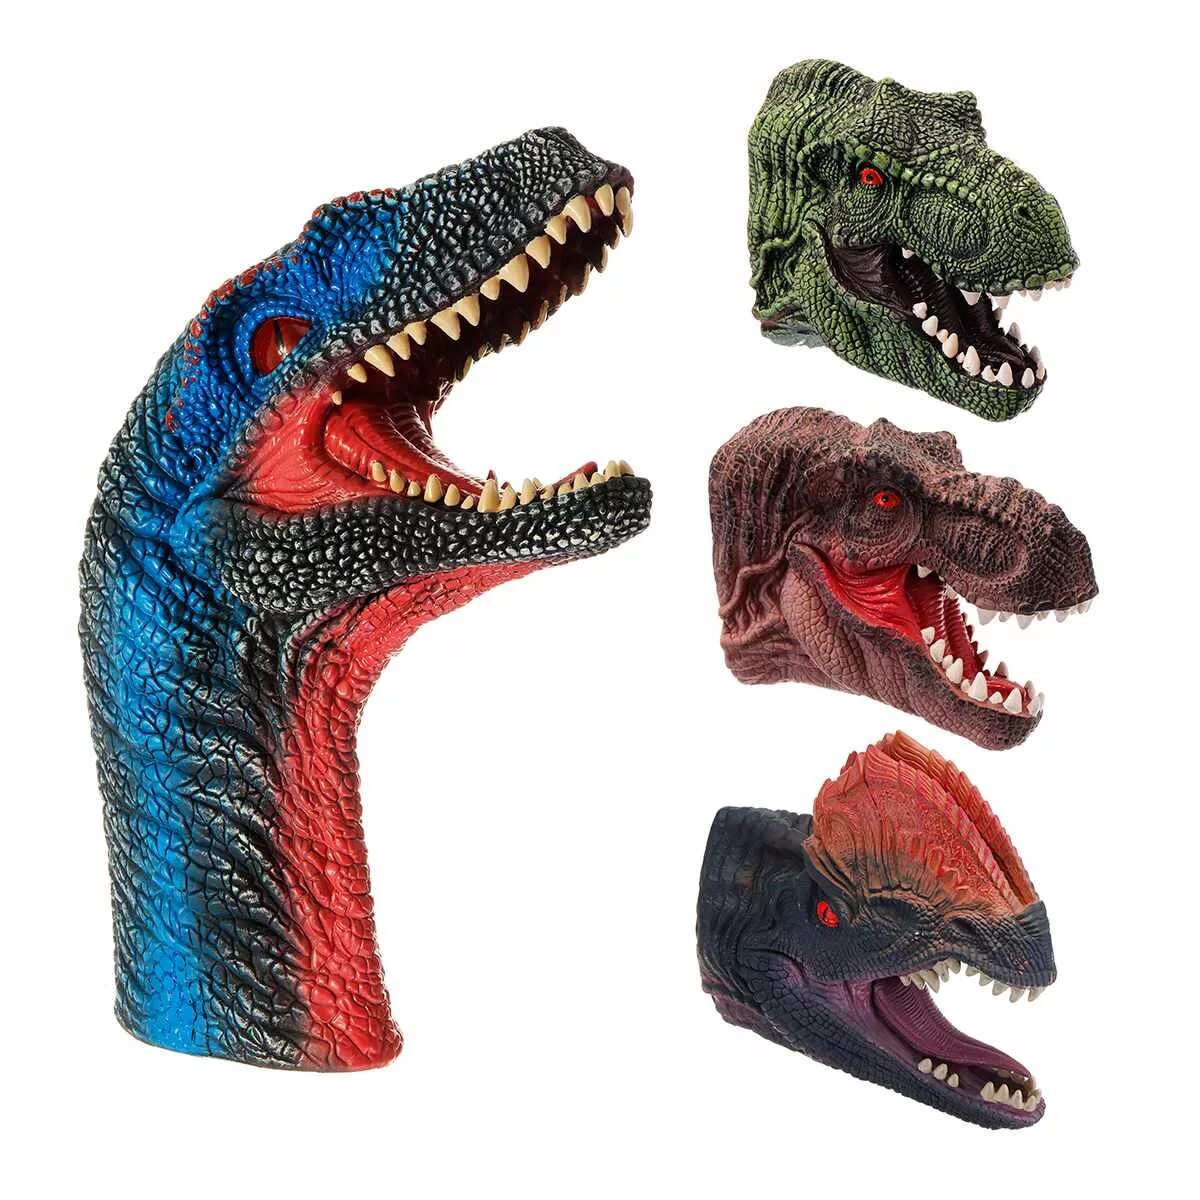 Динозавр на руку. Динозавр на руку игрушка. Динозавр на руку резиновый. Резиновая игрушка на руку динозавр. Голова динозавра игрушка.